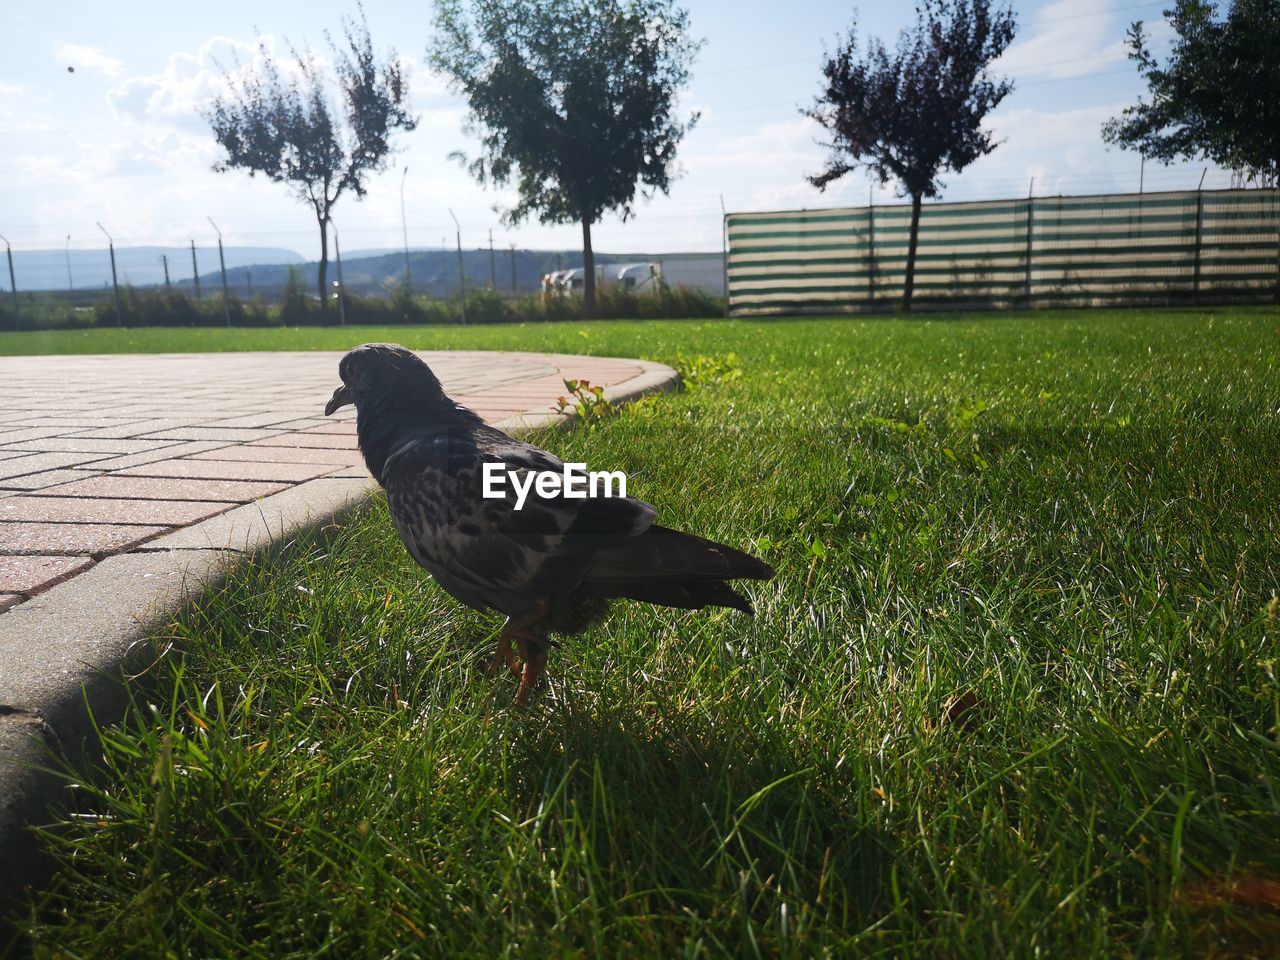 VIEW OF BIRD ON FIELD